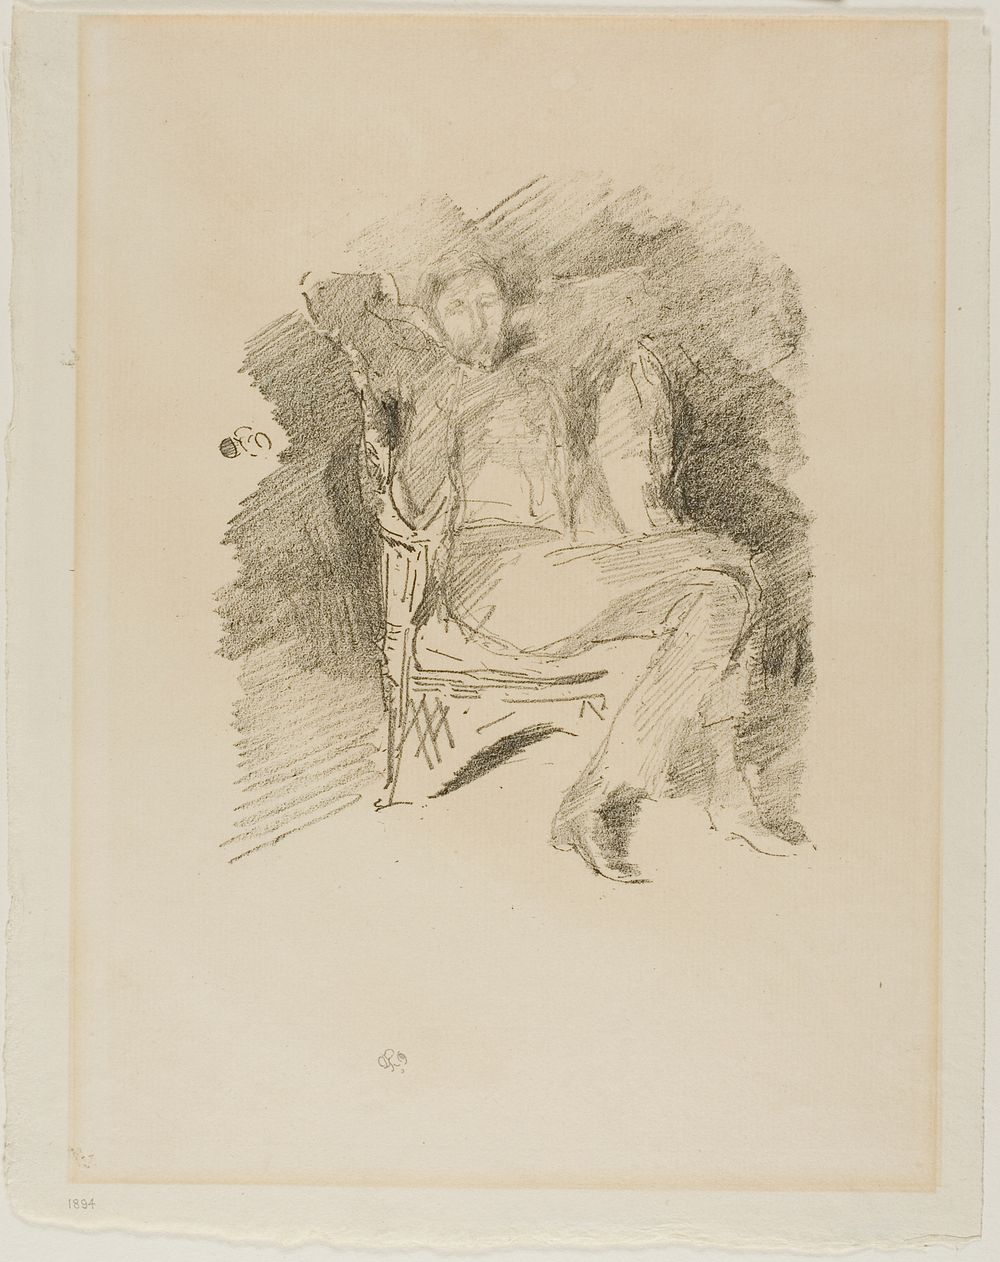 Firelight: Joseph Pennell, No. 1 by James McNeill Whistler